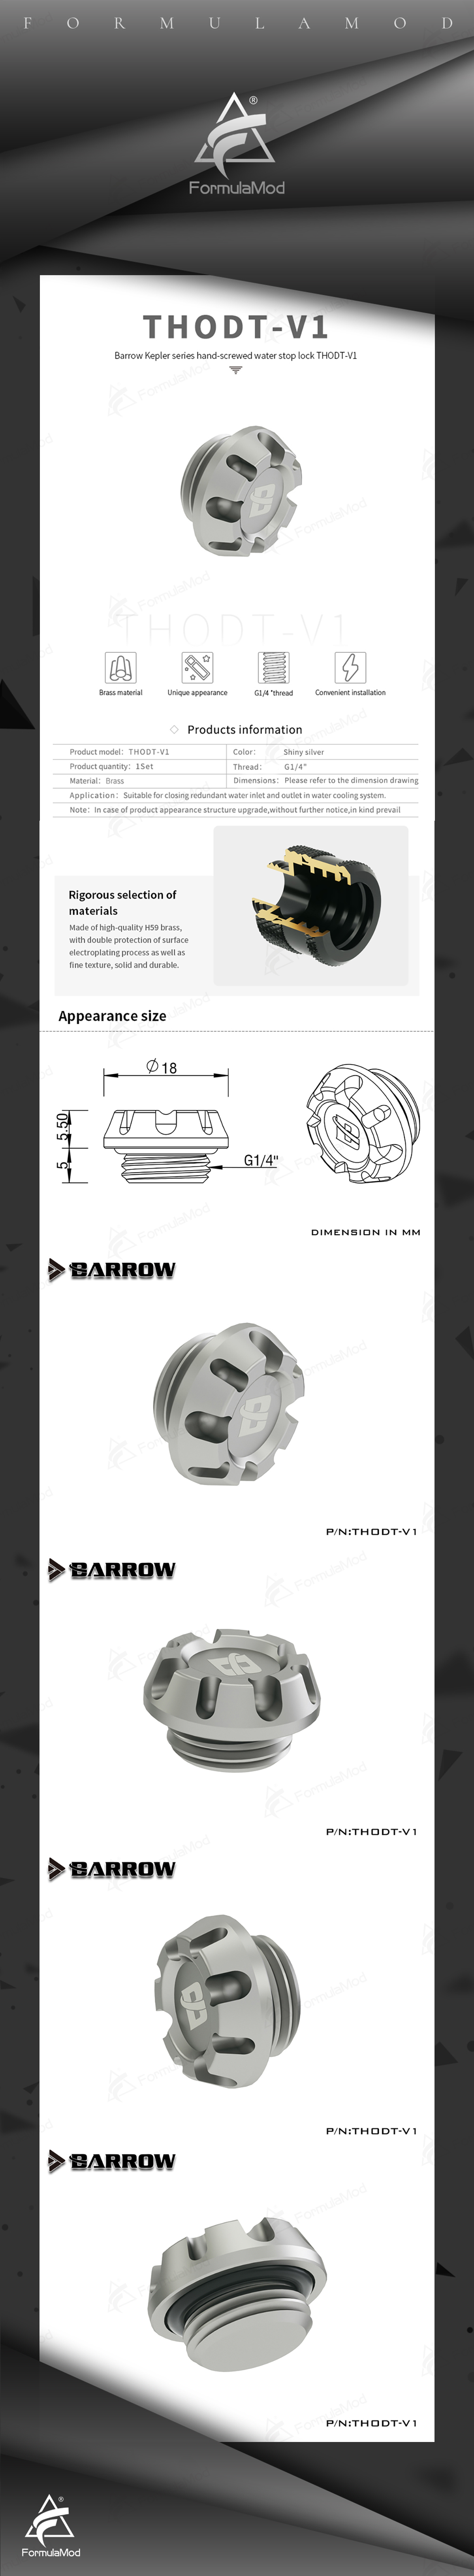 Barrow G1/4" Kepler Sliver Series Stop Plug Fitting, Water Stop Fitting, THODT-V1  